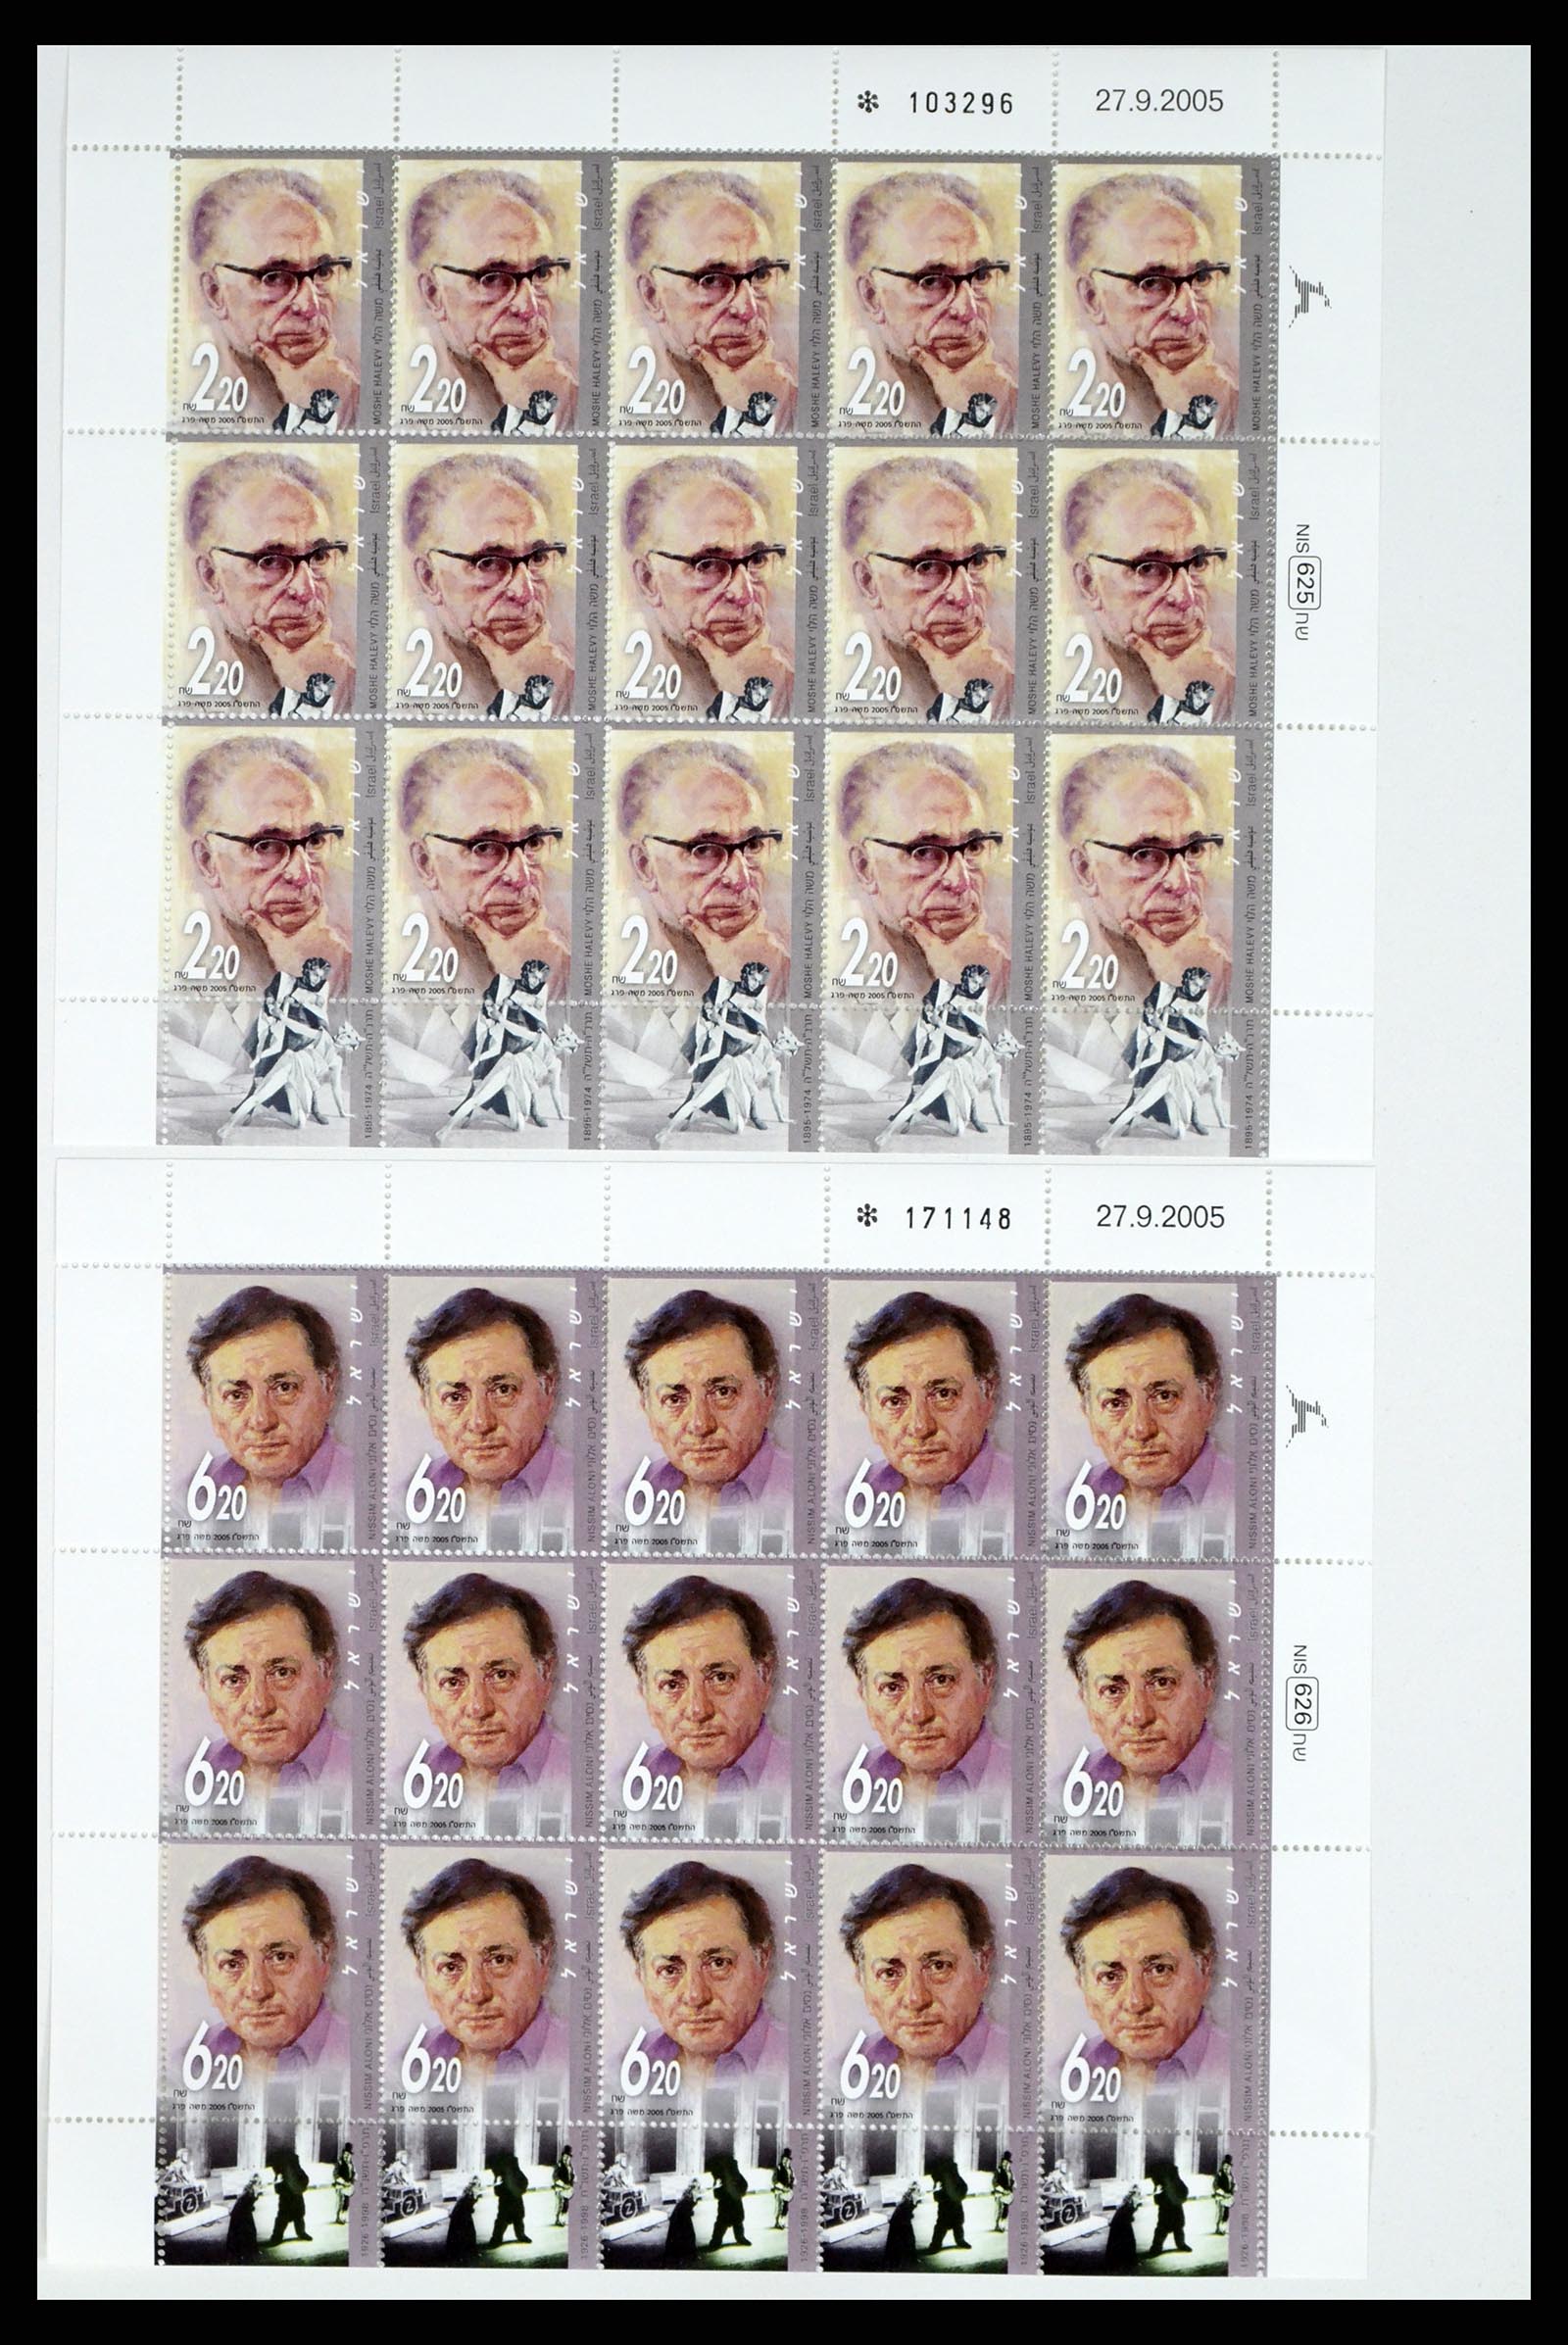 37779 362 - Stamp collection 37779 Israel sheetlets 1986-2009.